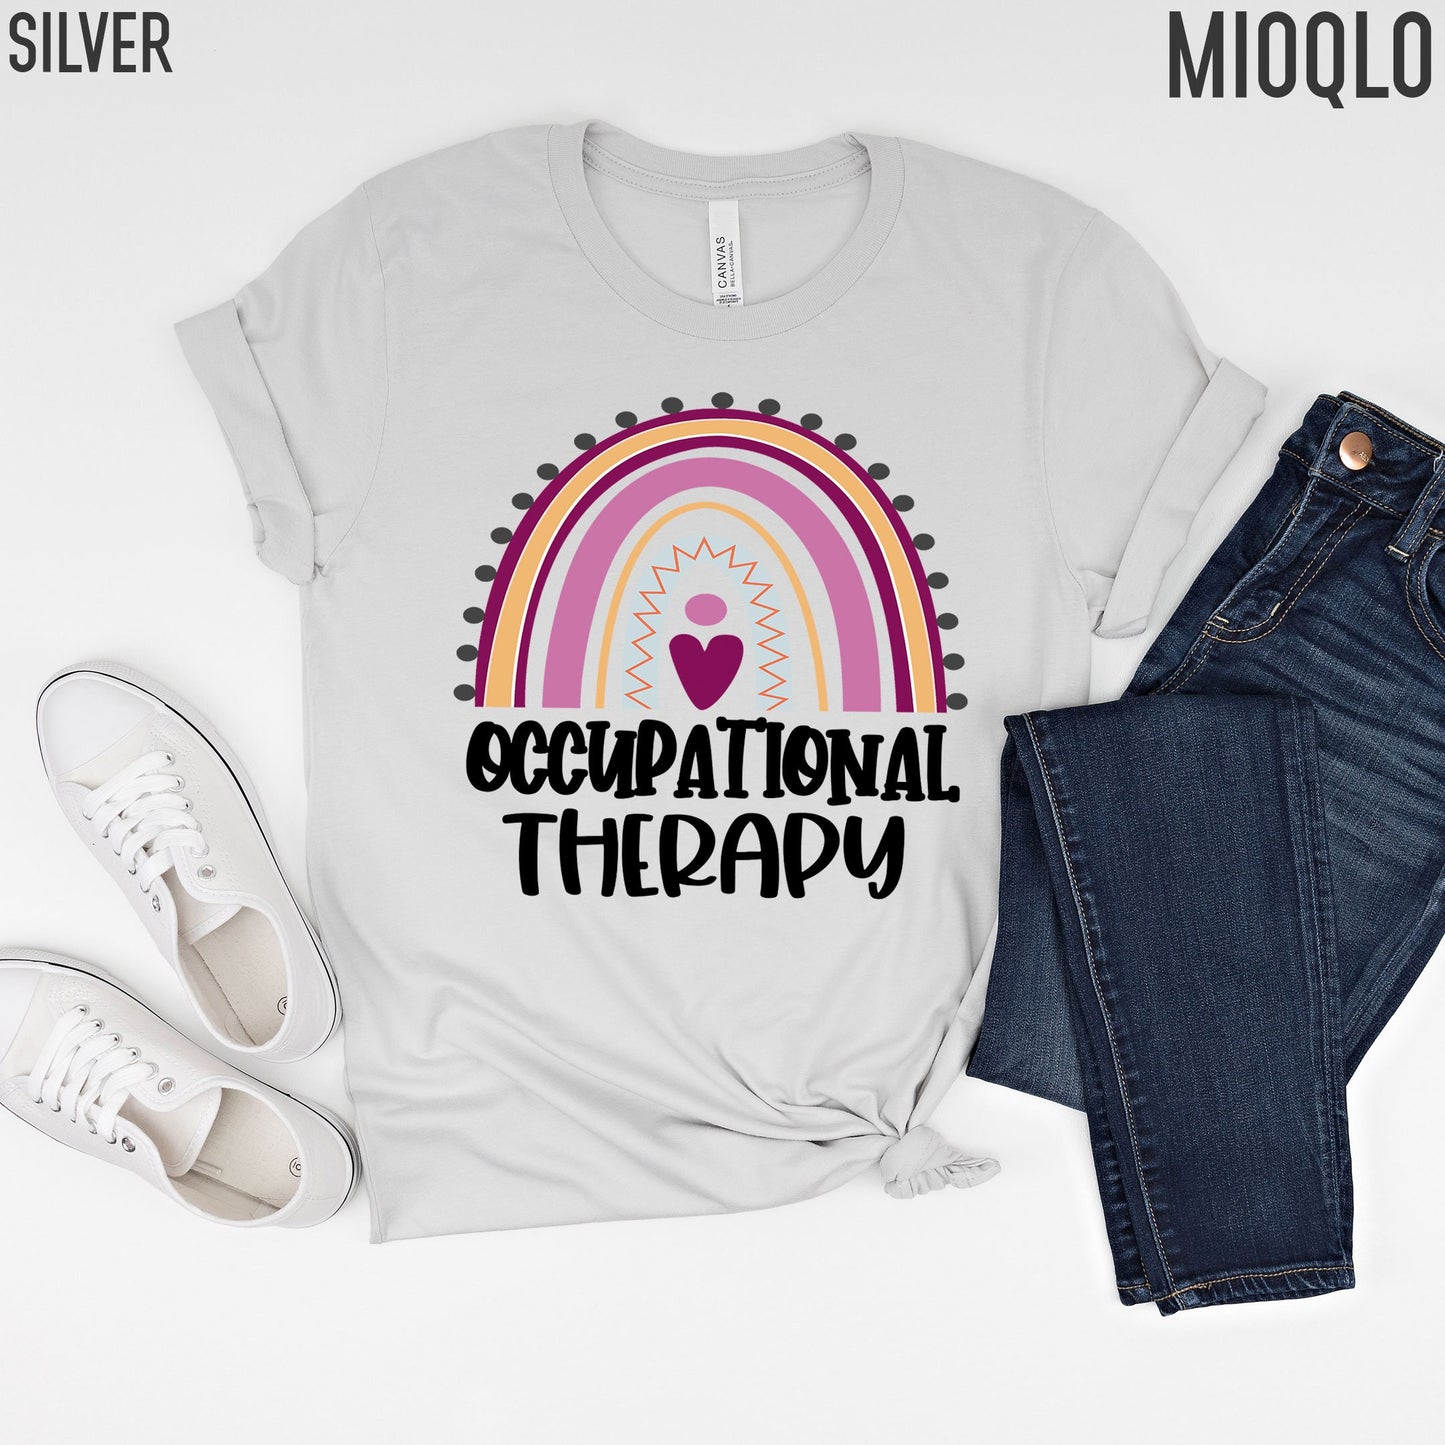 Occupational Therapy Shirt, OT Shirt, OTA Shirt, Occupational Therapy Gifts, Occupational Therapy, Occupational Therapy Assistant, Therapist